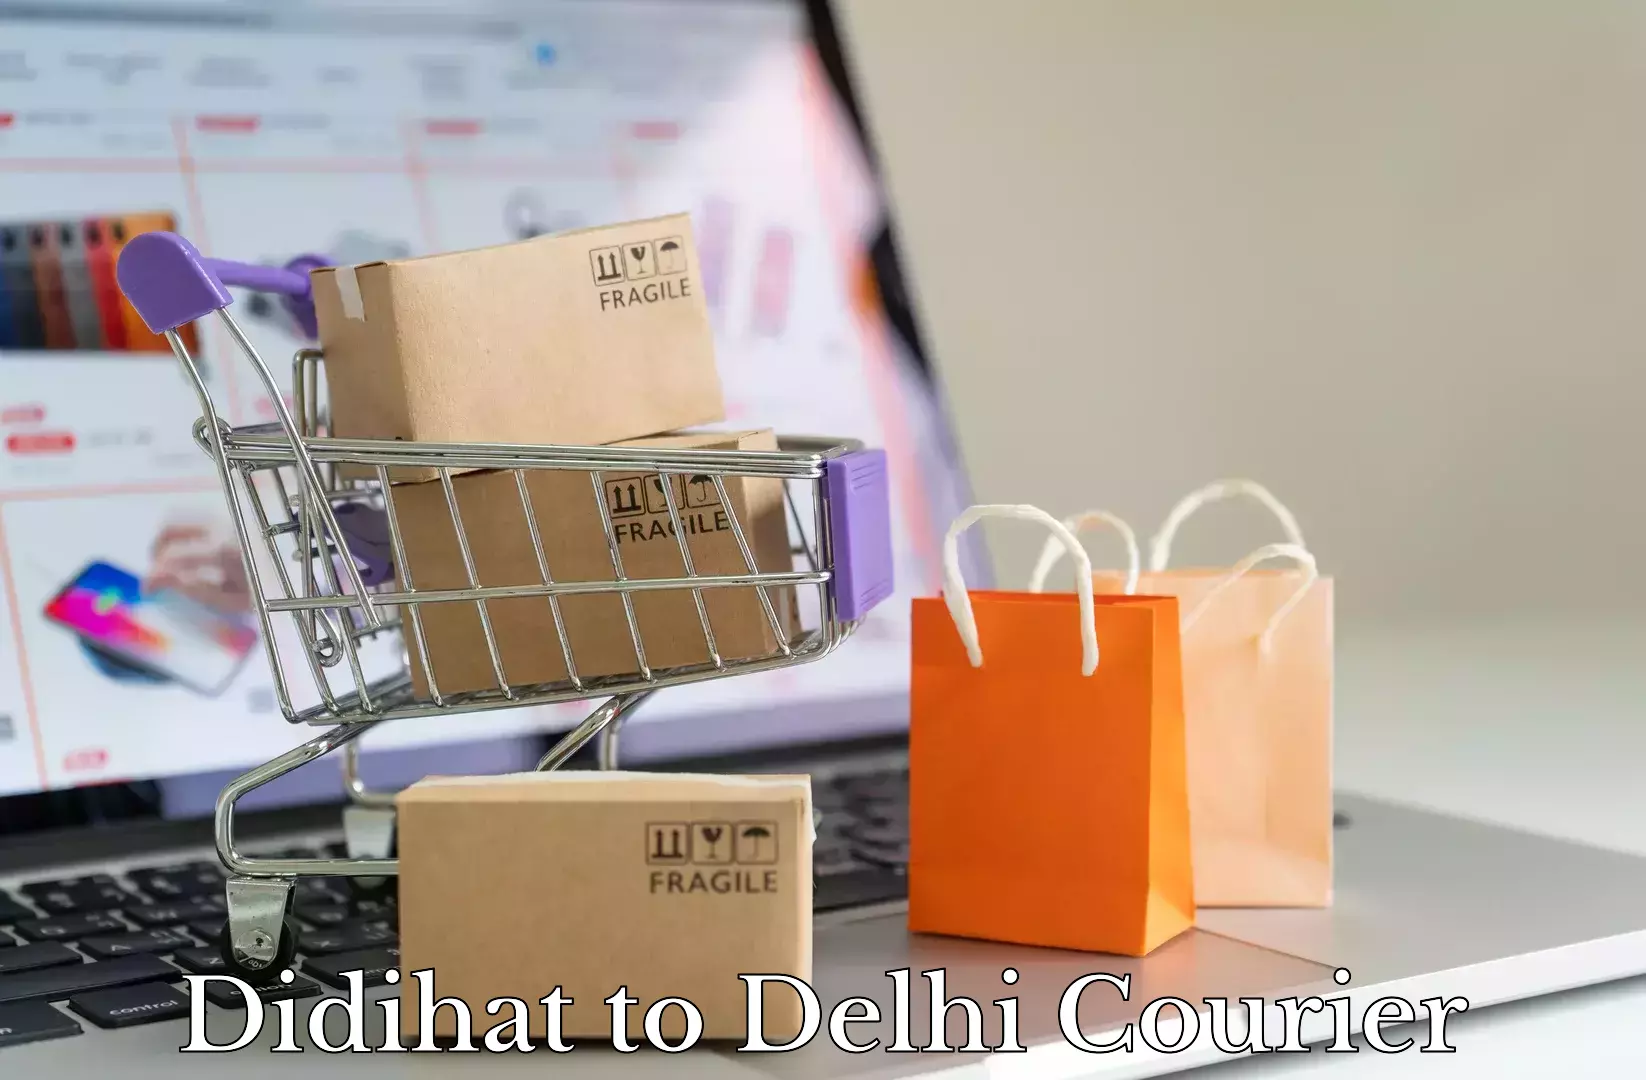 Professional moving company Didihat to Delhi